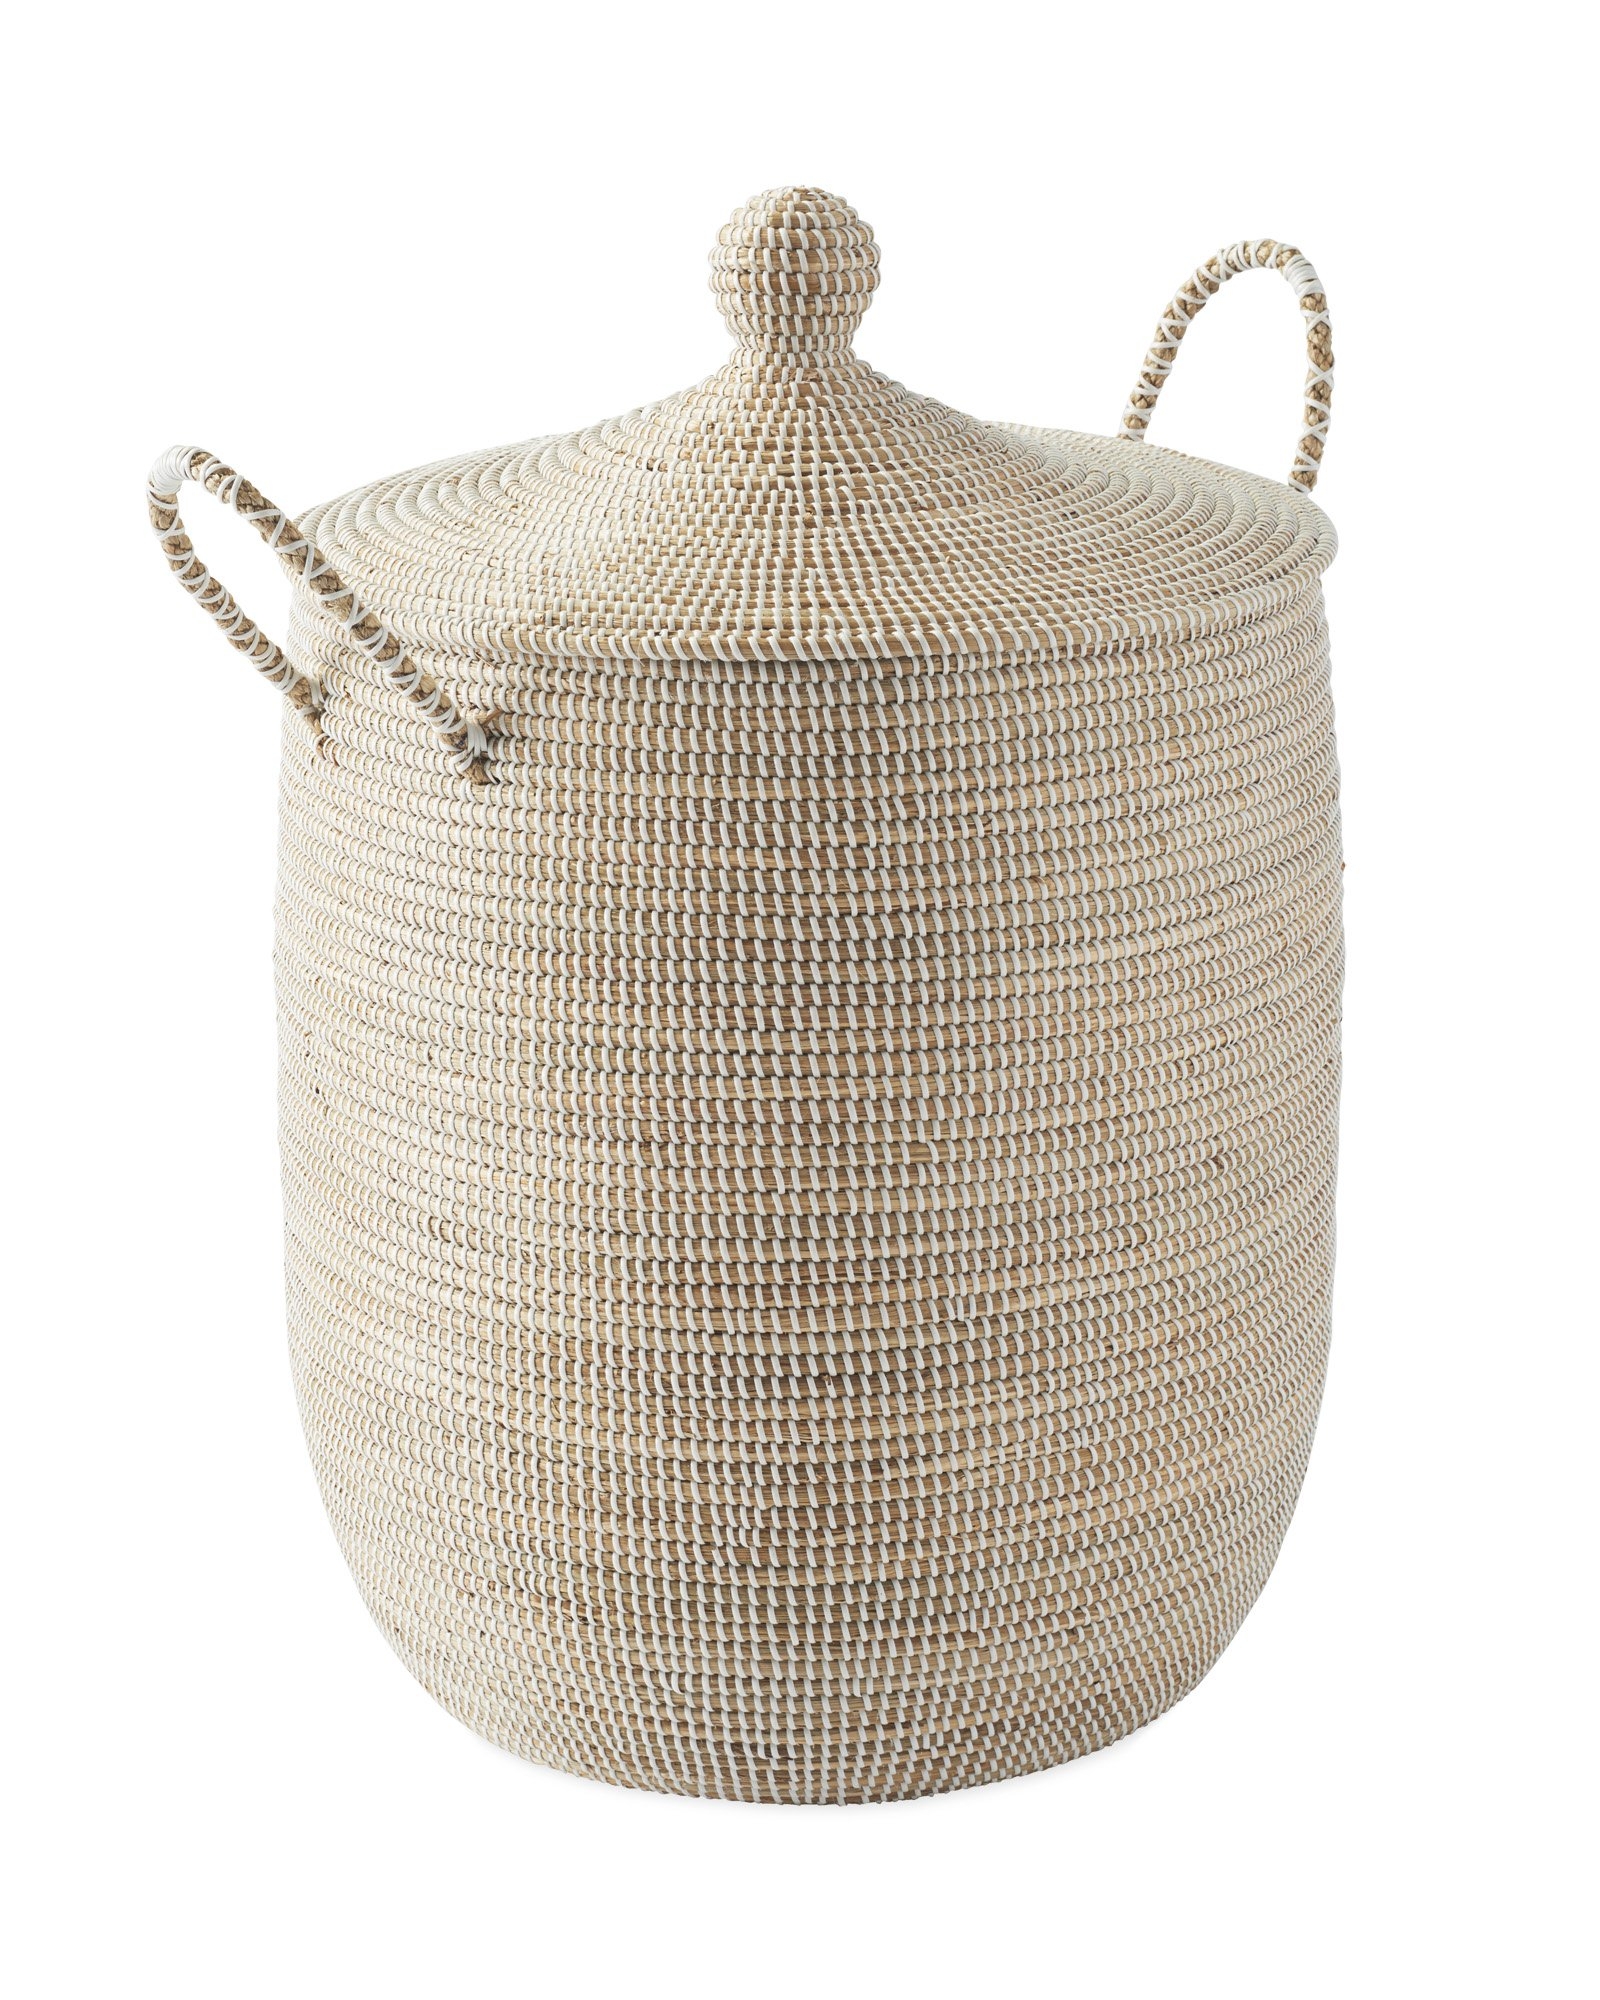 Solid La Jolla Large Basket - White - Image 5